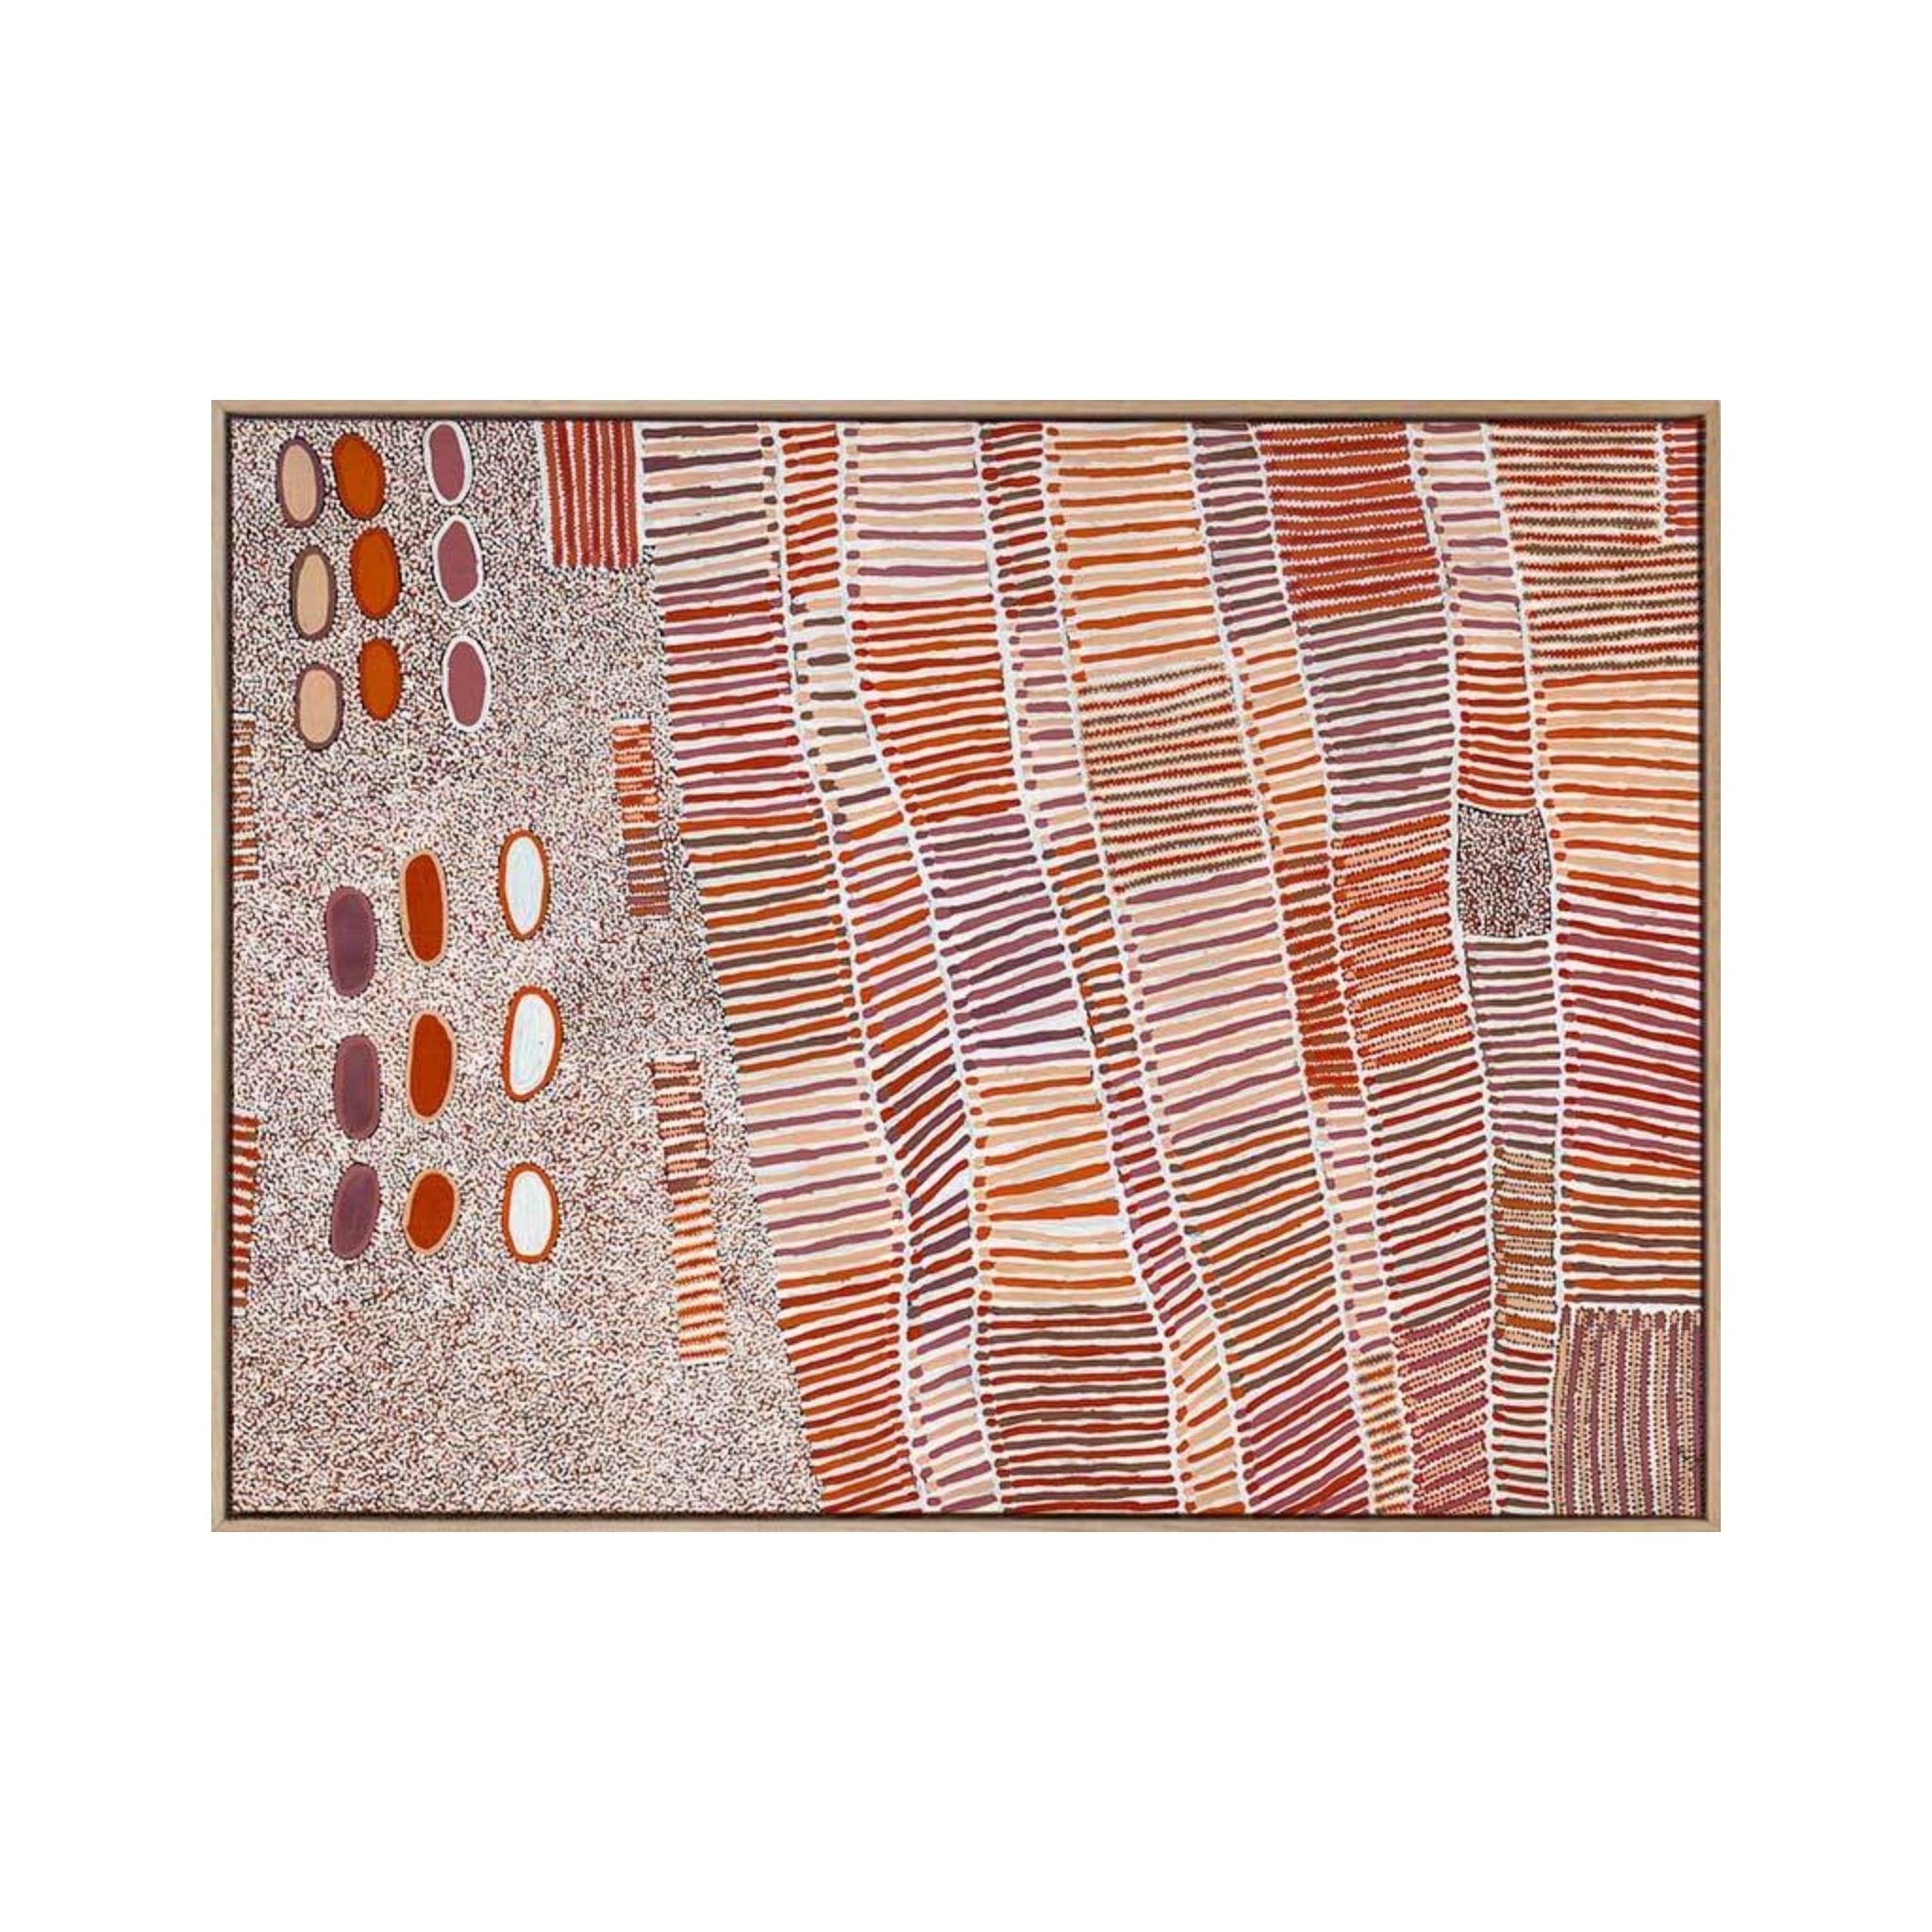 Aboriginal Collection - Lupul Red Canvas Art Print